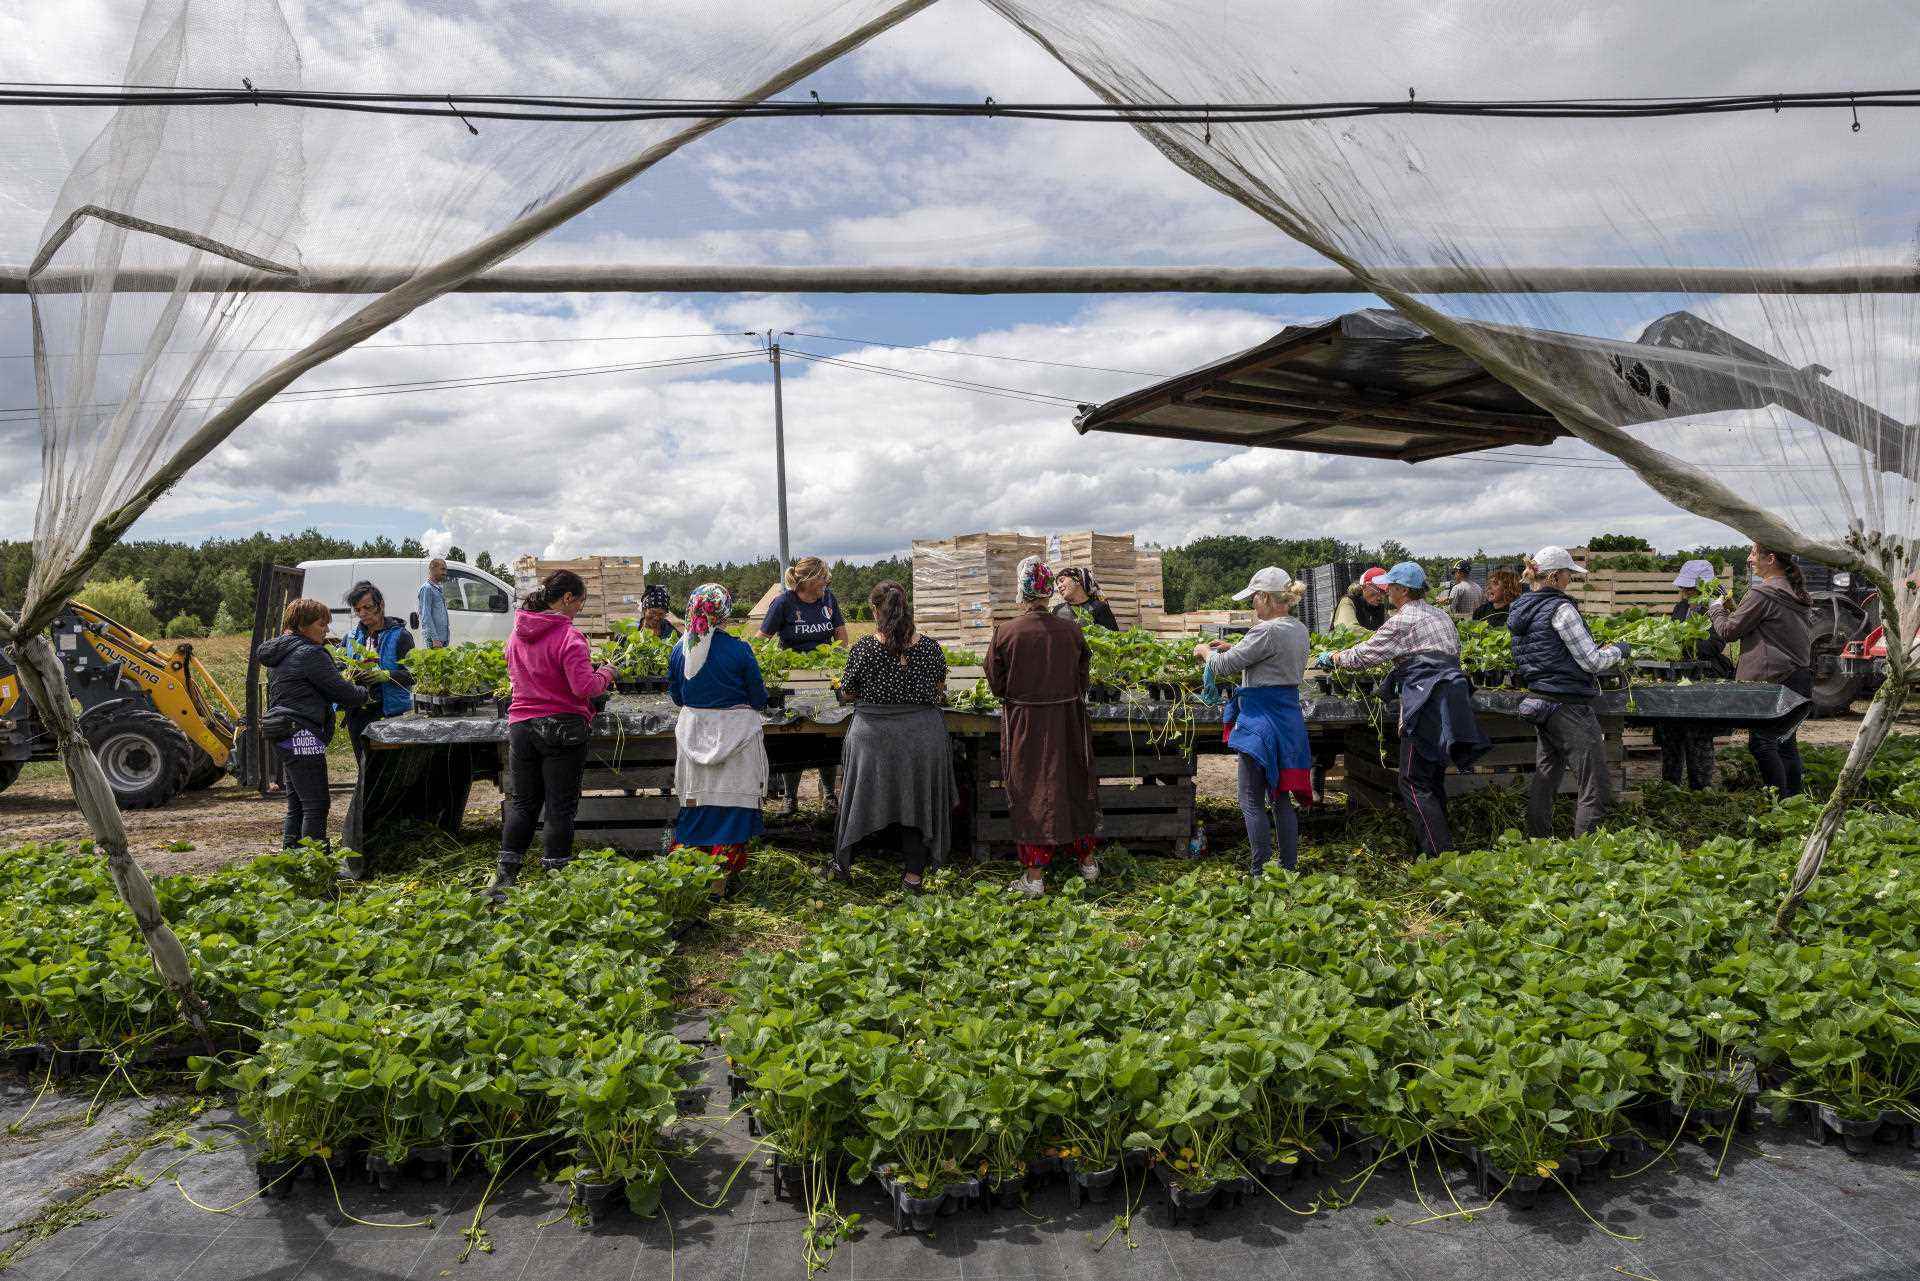 Bulgarian seasonal workers work on the preparation of strawberry plants, in Fontaine-en-Sologne (Loir-et-Cher), June 8, 2022.